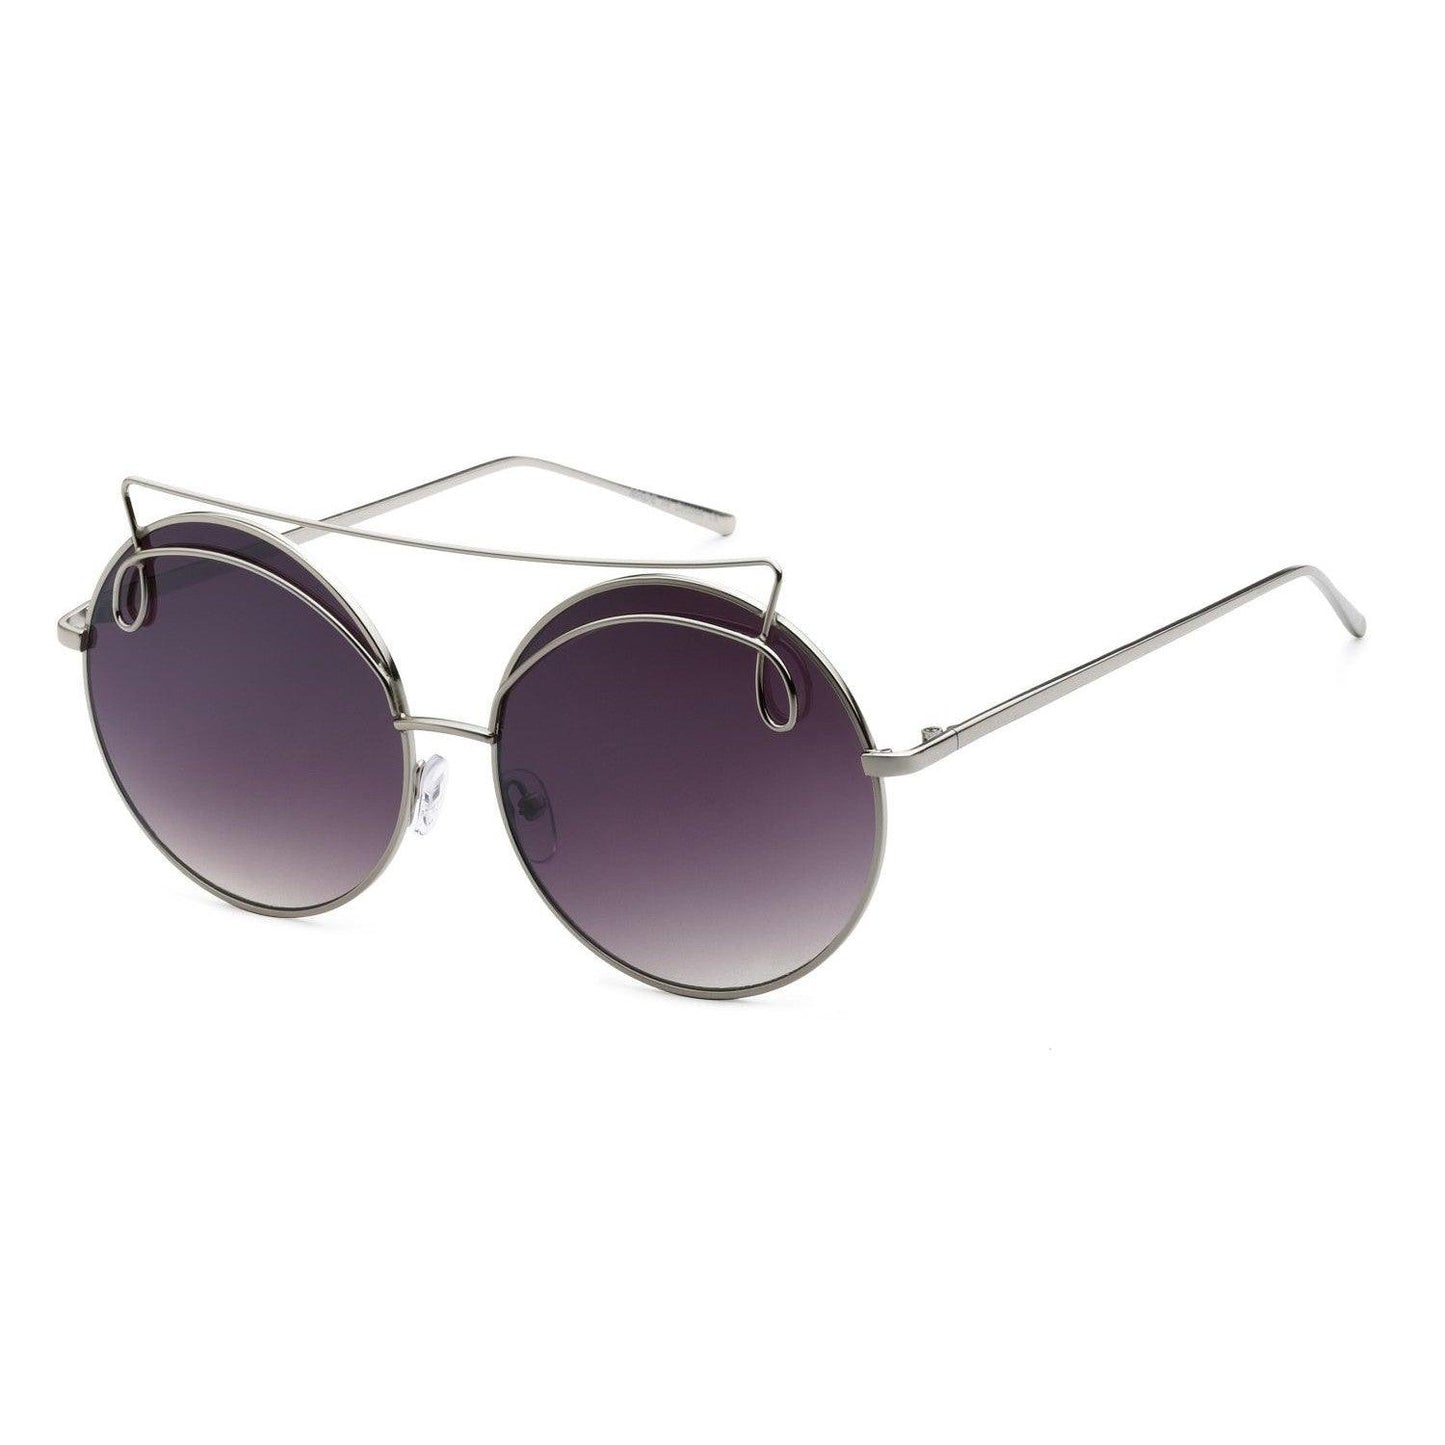 "Valerie" Metal Round Sunglasses - Weekend Shade Sunglasses